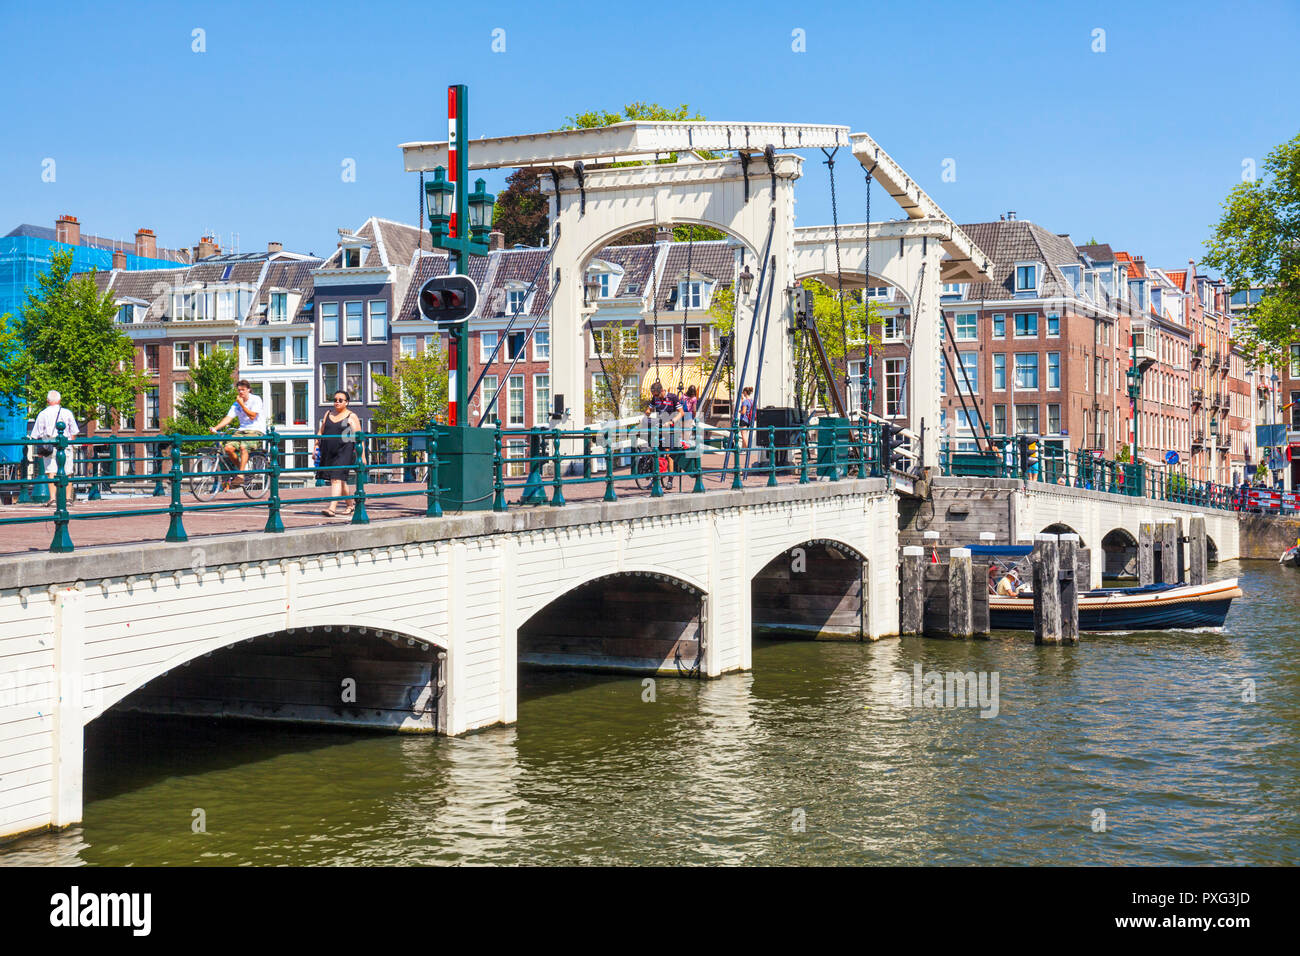 Amsterdam Magere Brug Skinny bridge Amsterdam Amsterdam Le double pont-levis enjambant la rivière Amstel Amsterdam Pays-Bas Hollande eu Europe Banque D'Images